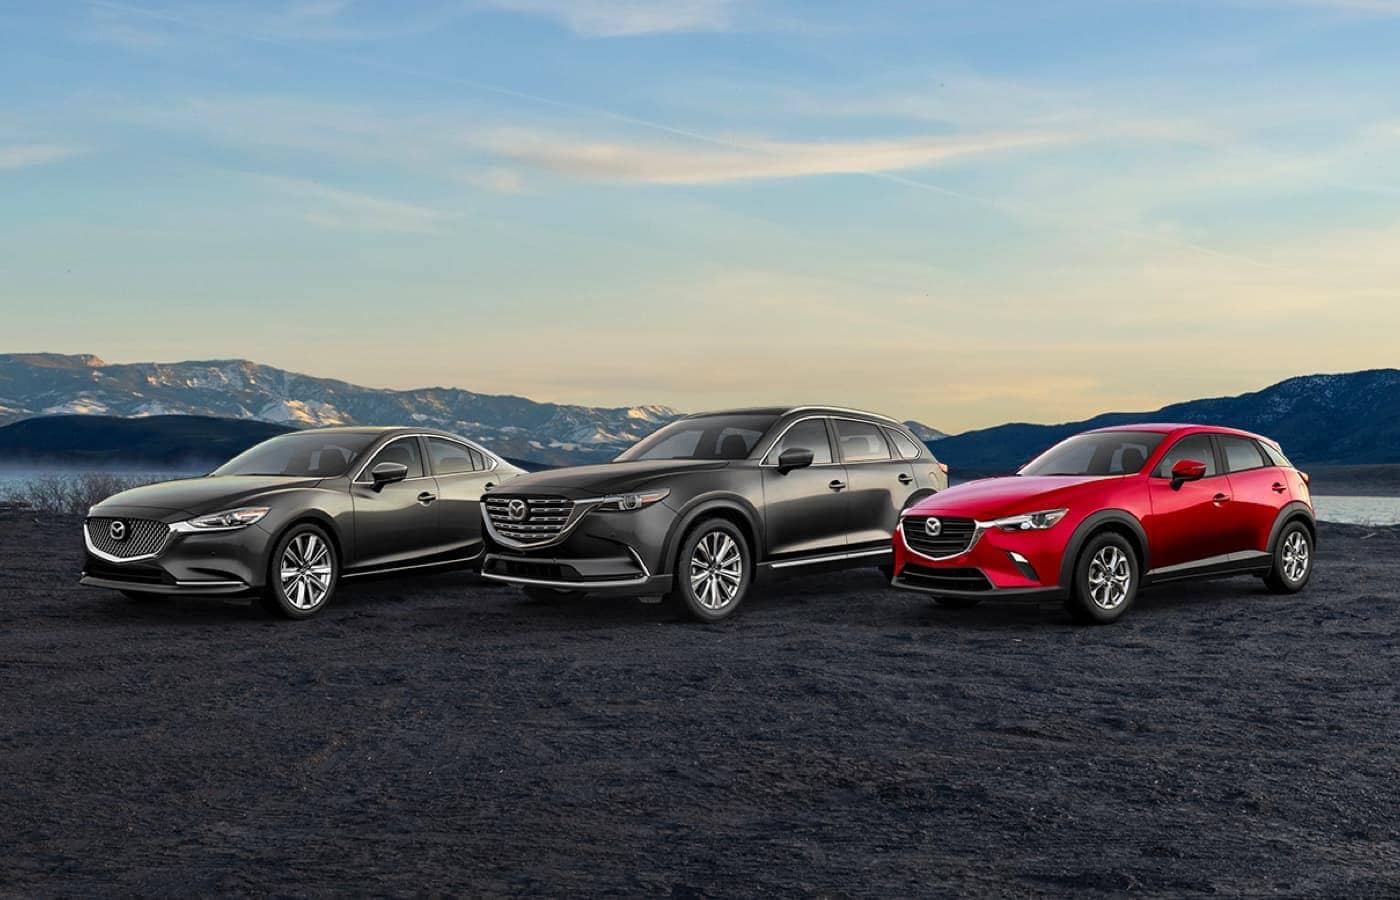 Three Mazda vehicles parked outside